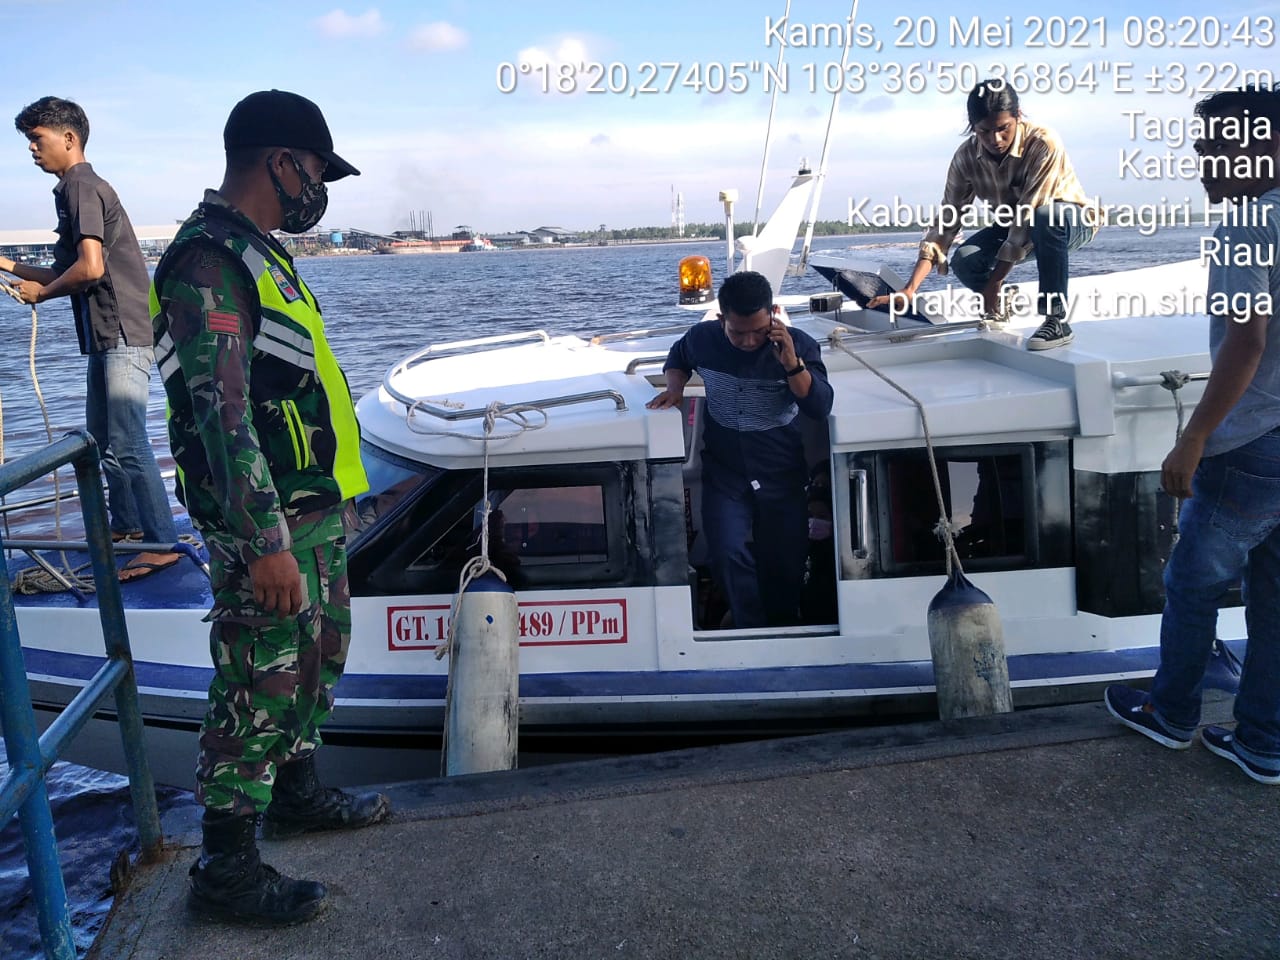 Praka Ferry S Pantau Aktifitas di Pelabuhan Syahbandar Guntung